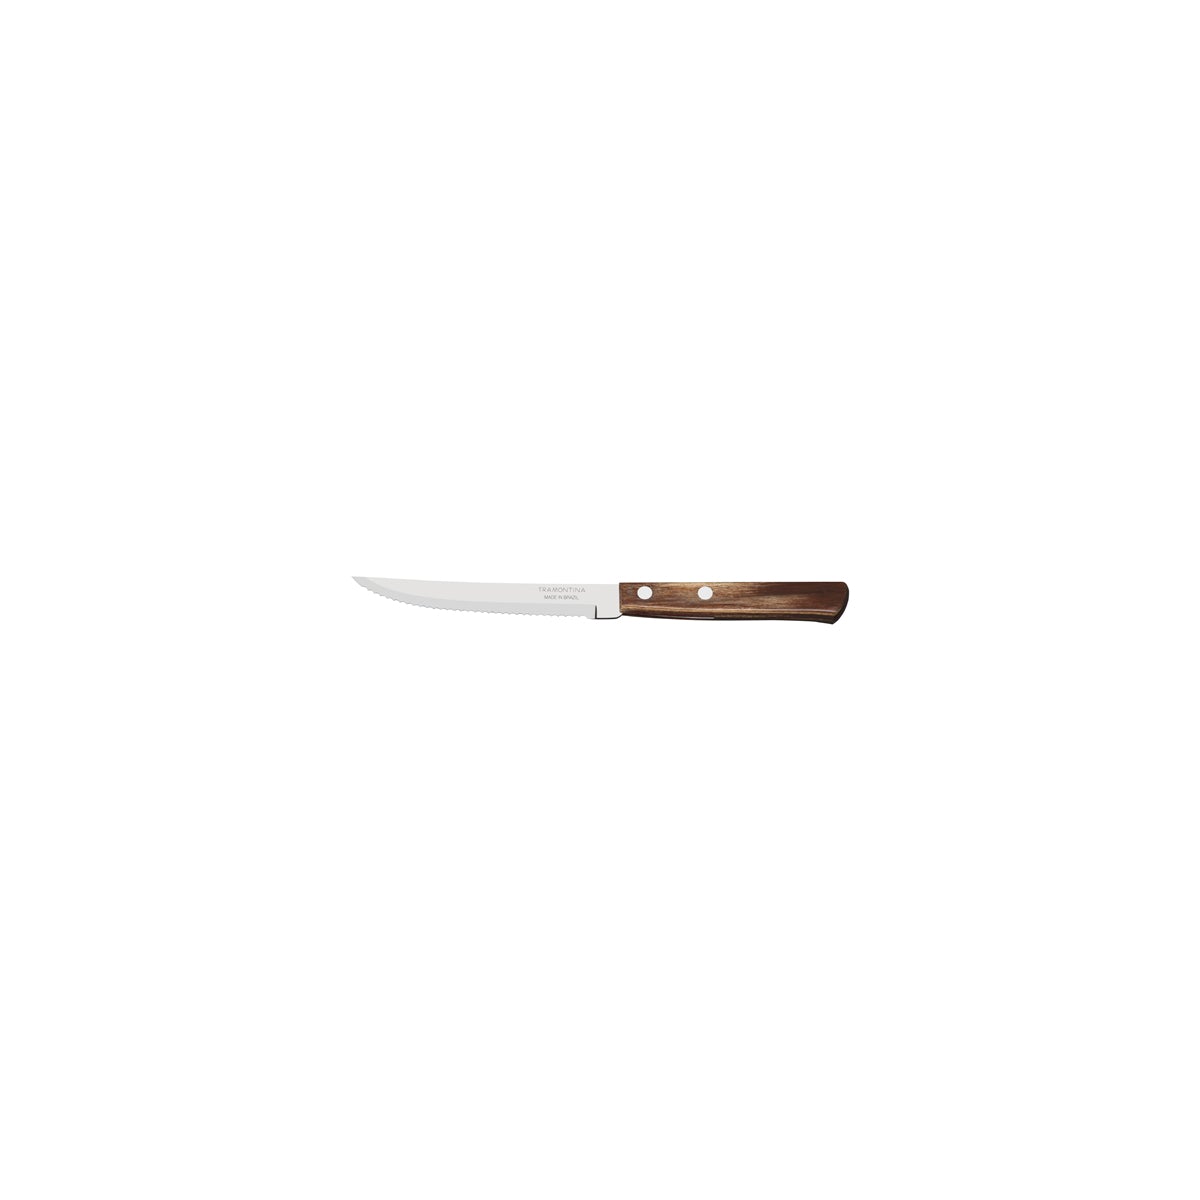 TM21100/495 Tramontina Churrasco Steak Knife Serrated Narrow Blade with Polywood Handle Brown 127mm Tomkin Australia Hospitality Supplies